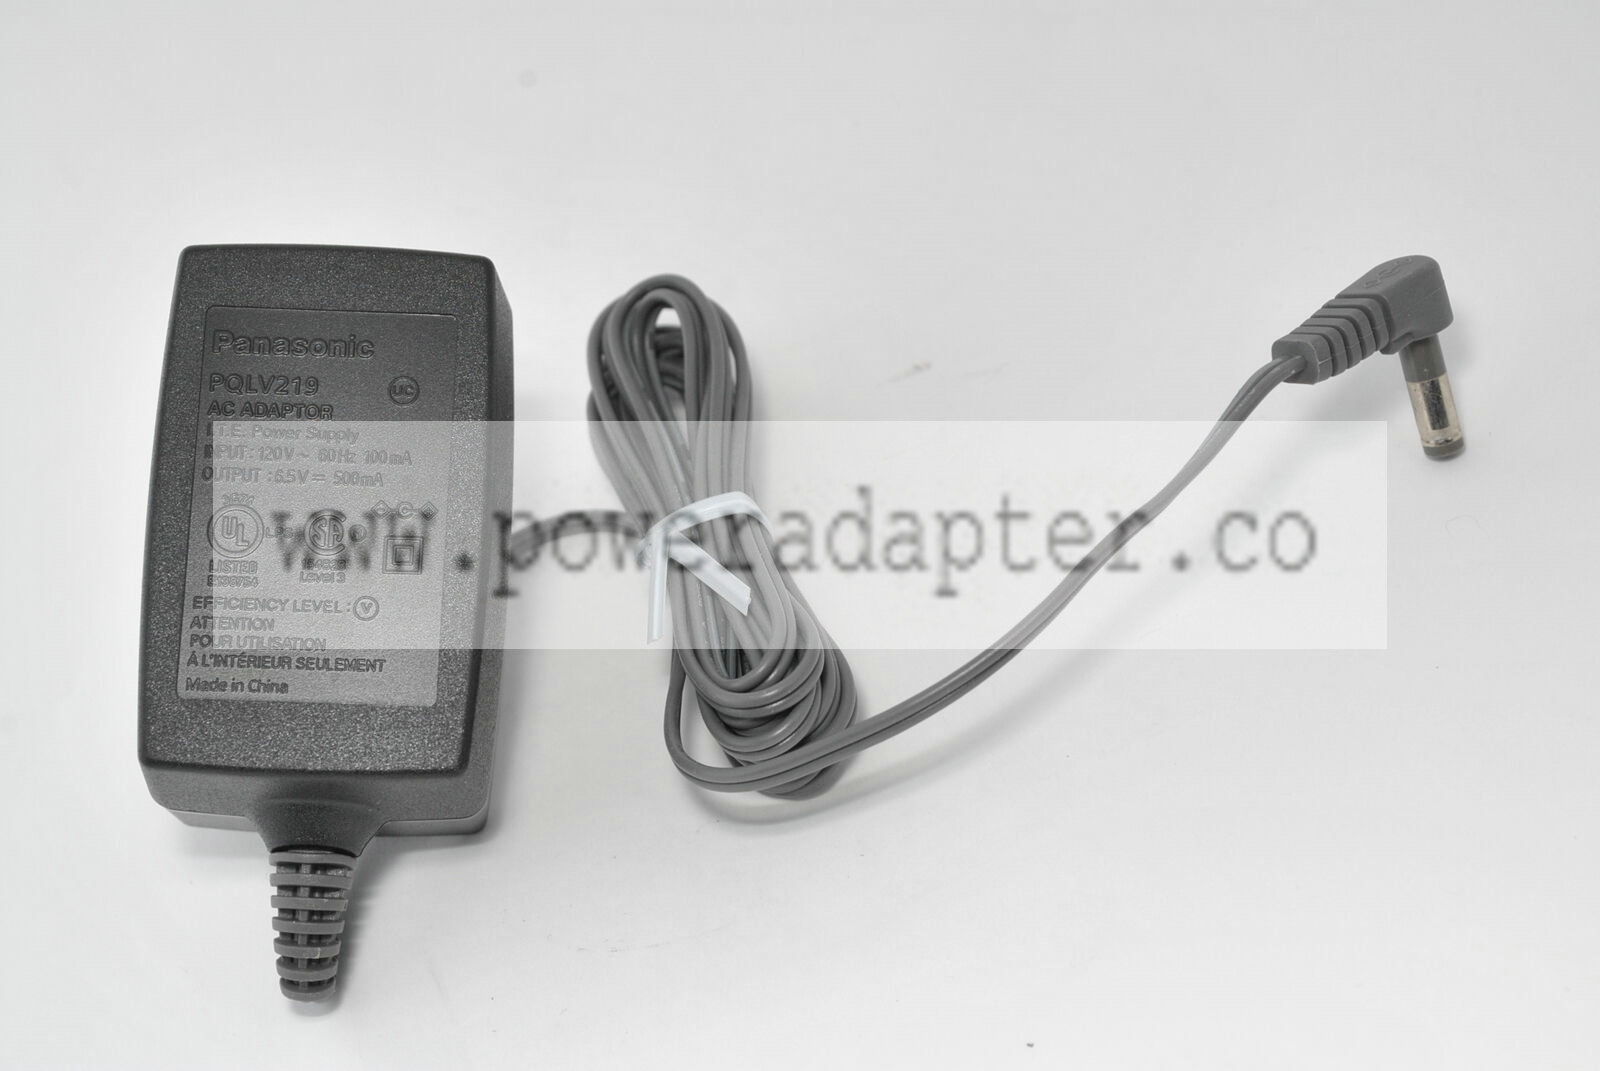 F/S Panasonic PQLV219 AC Power Supply Adapter Adaptor 6.5V DC 500mA from Japan Model: PQLV219 Brand: Panasonic Mod